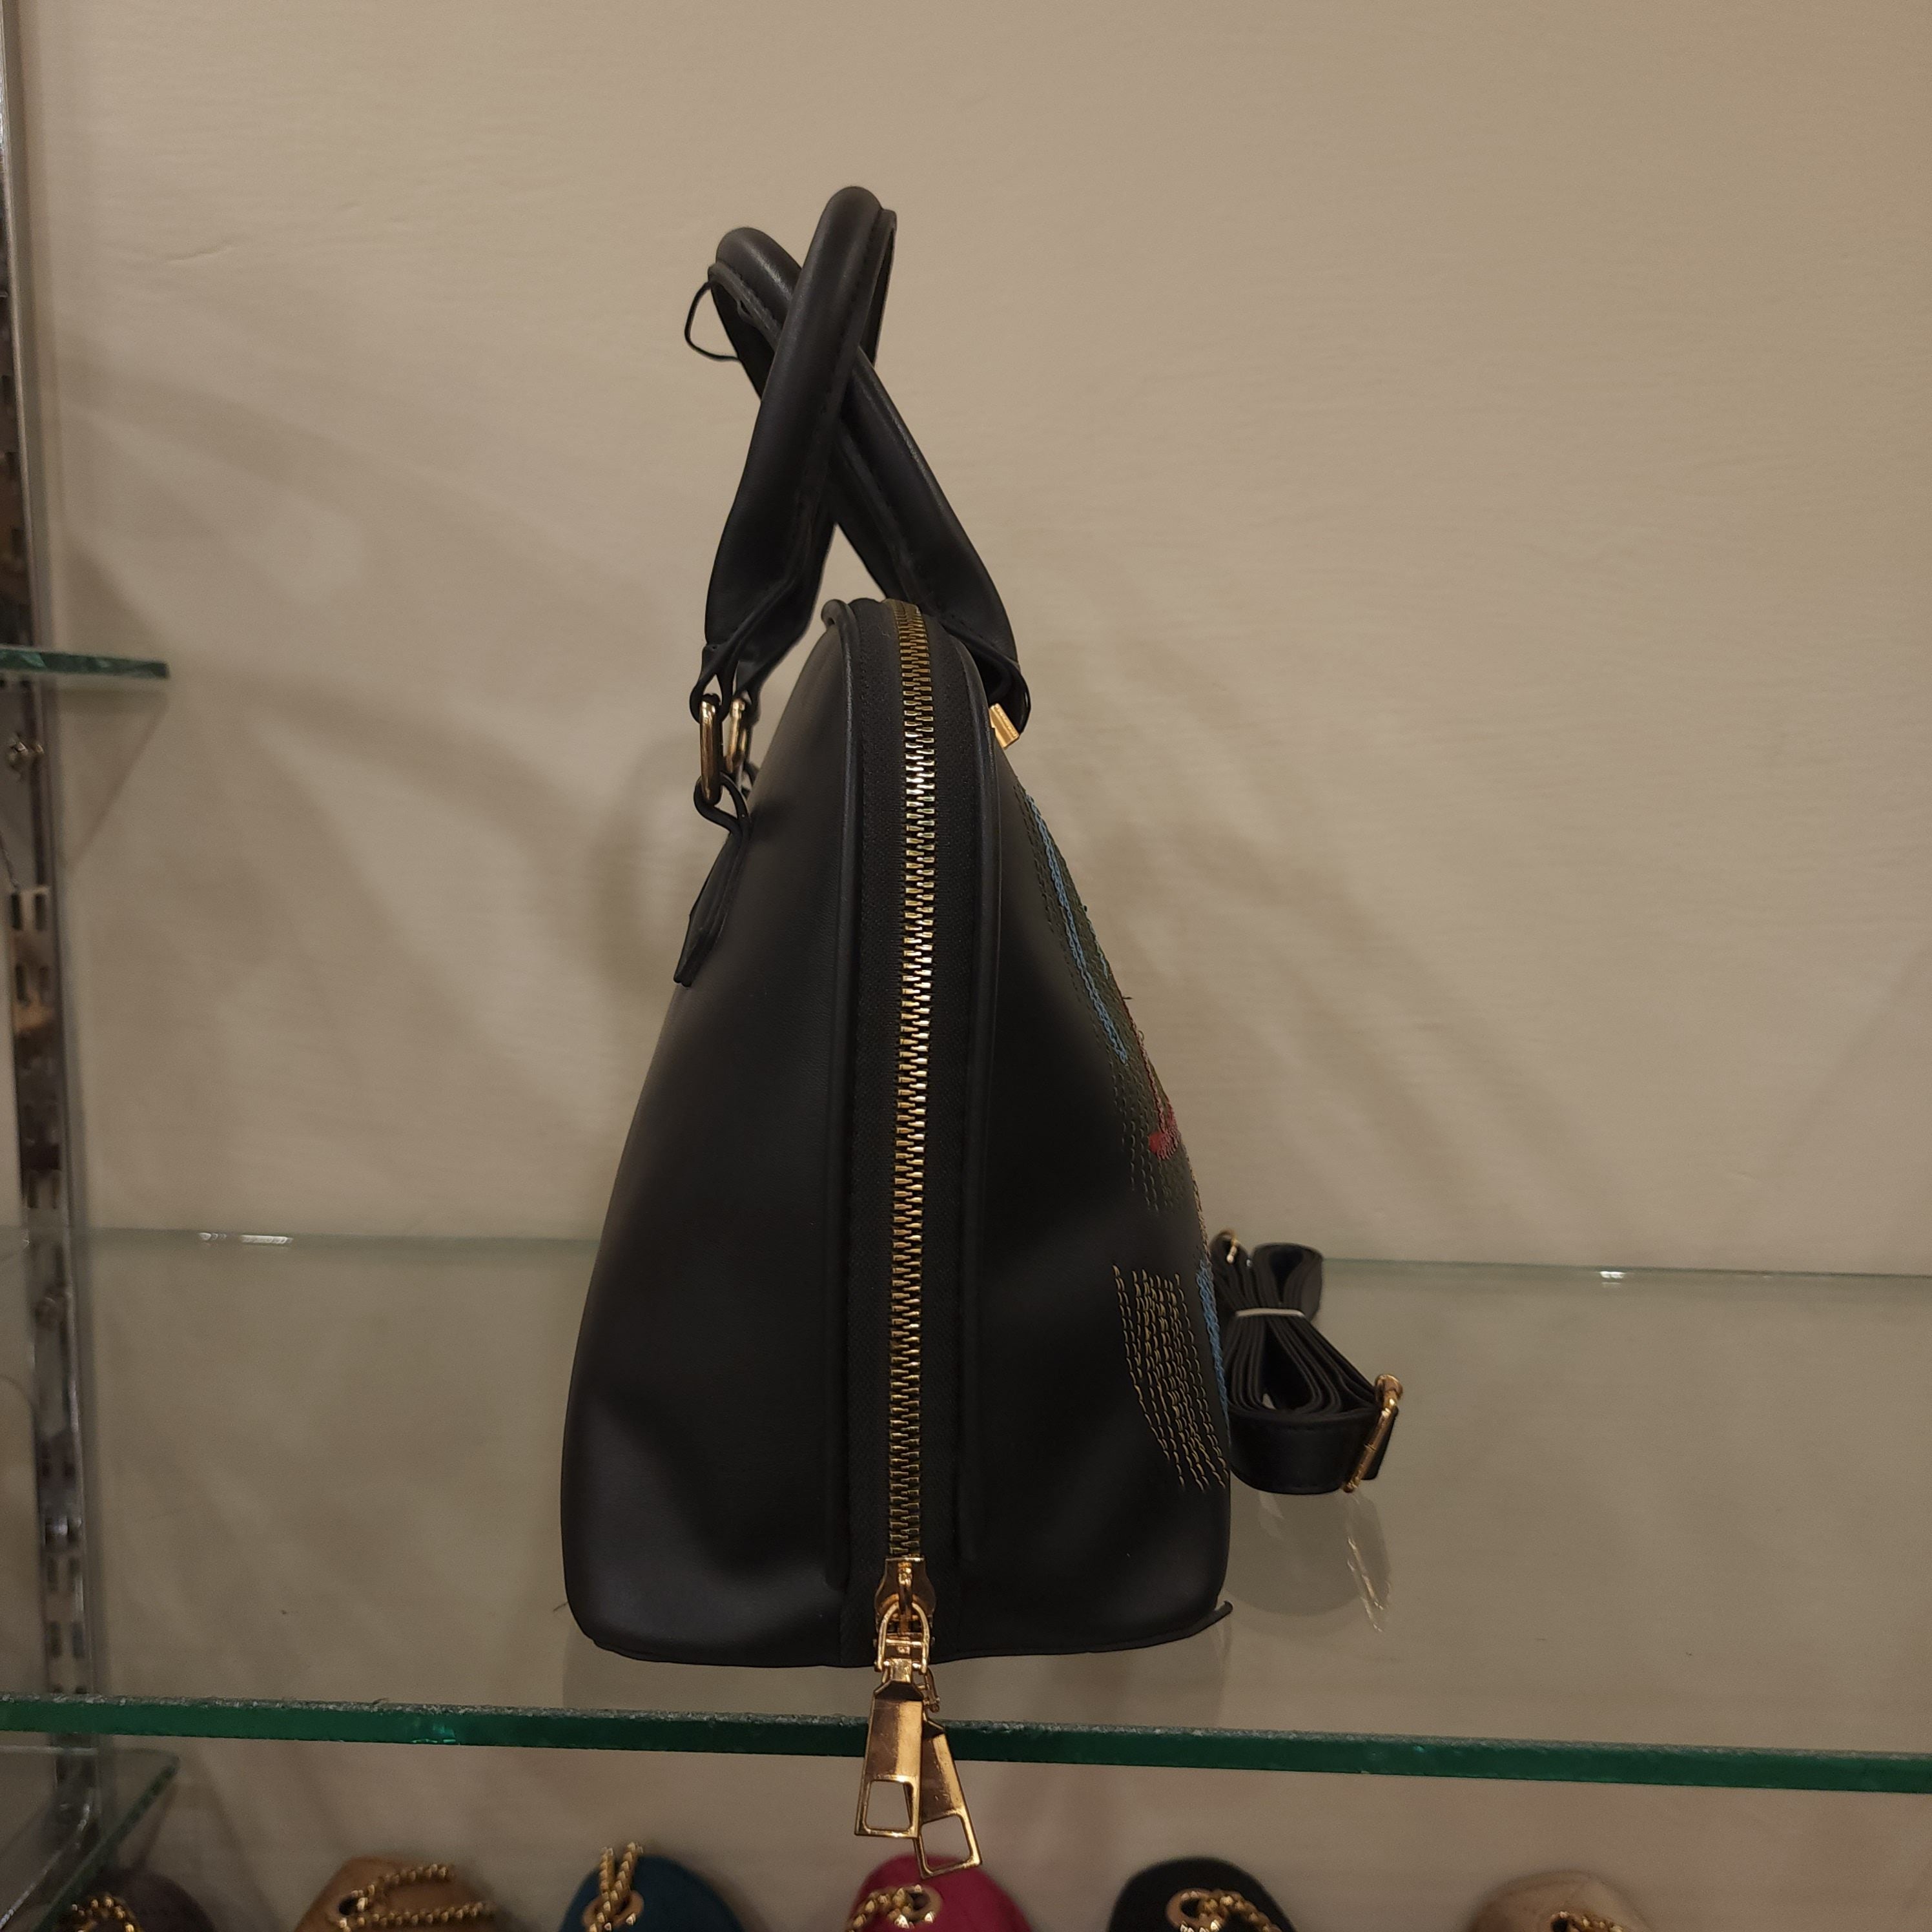 Casual Handbags - Maha fashions -  Handbags & Wallets